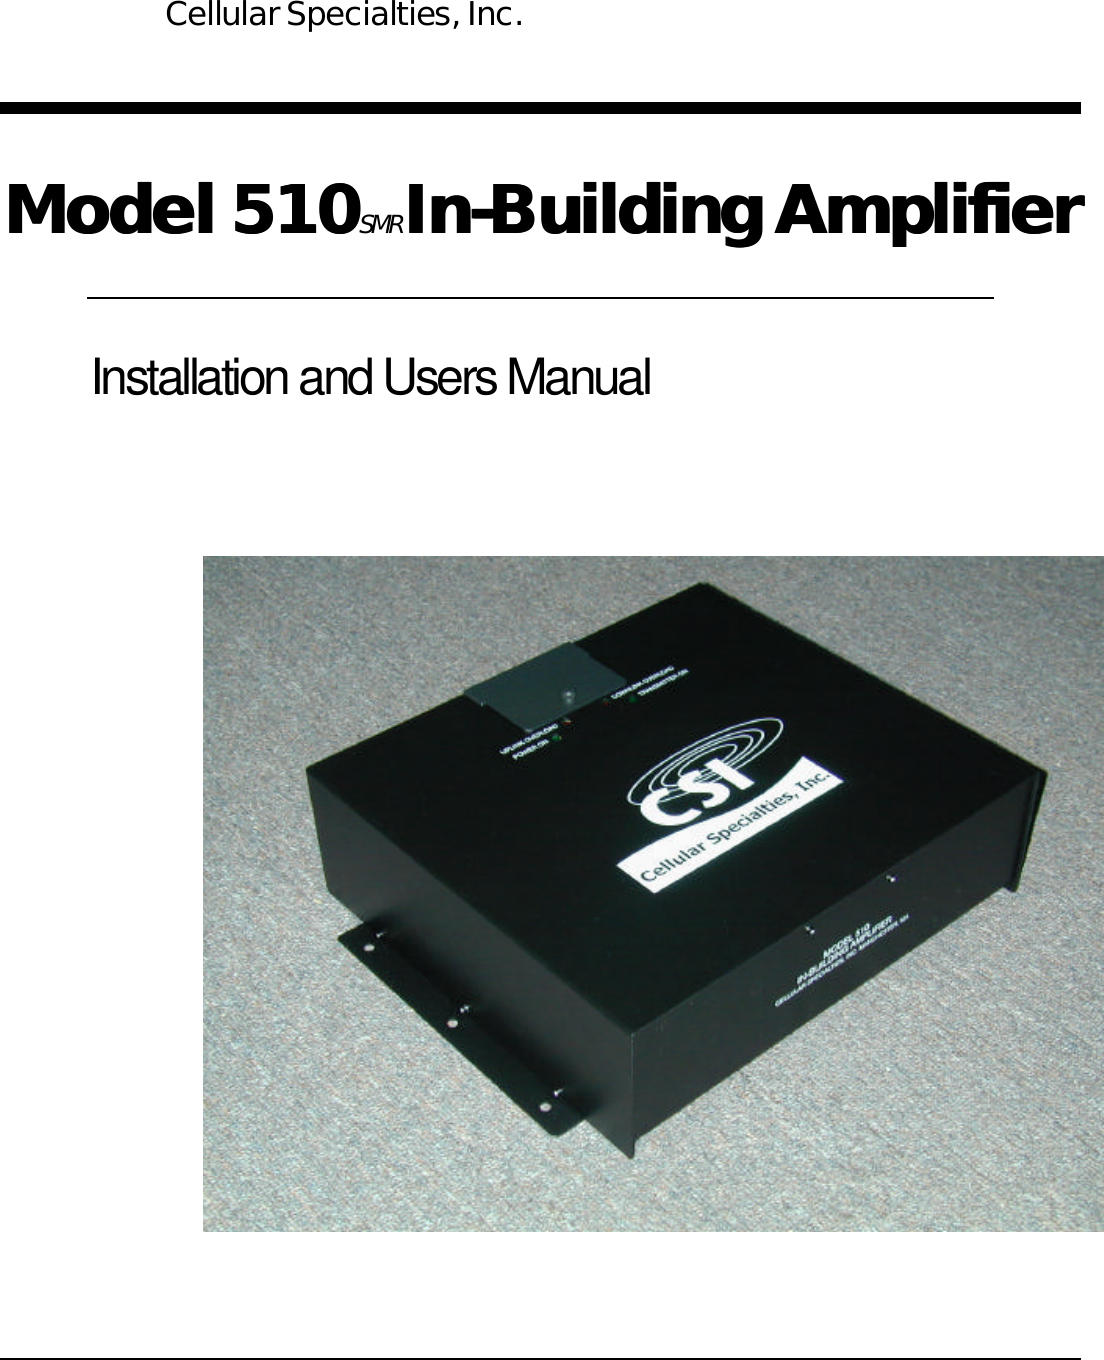     Model 510Model 510SMR  InIn--Building AmplifierBuilding Amplifier  Installation and Users Manual       Cellular Specialties, Inc.  